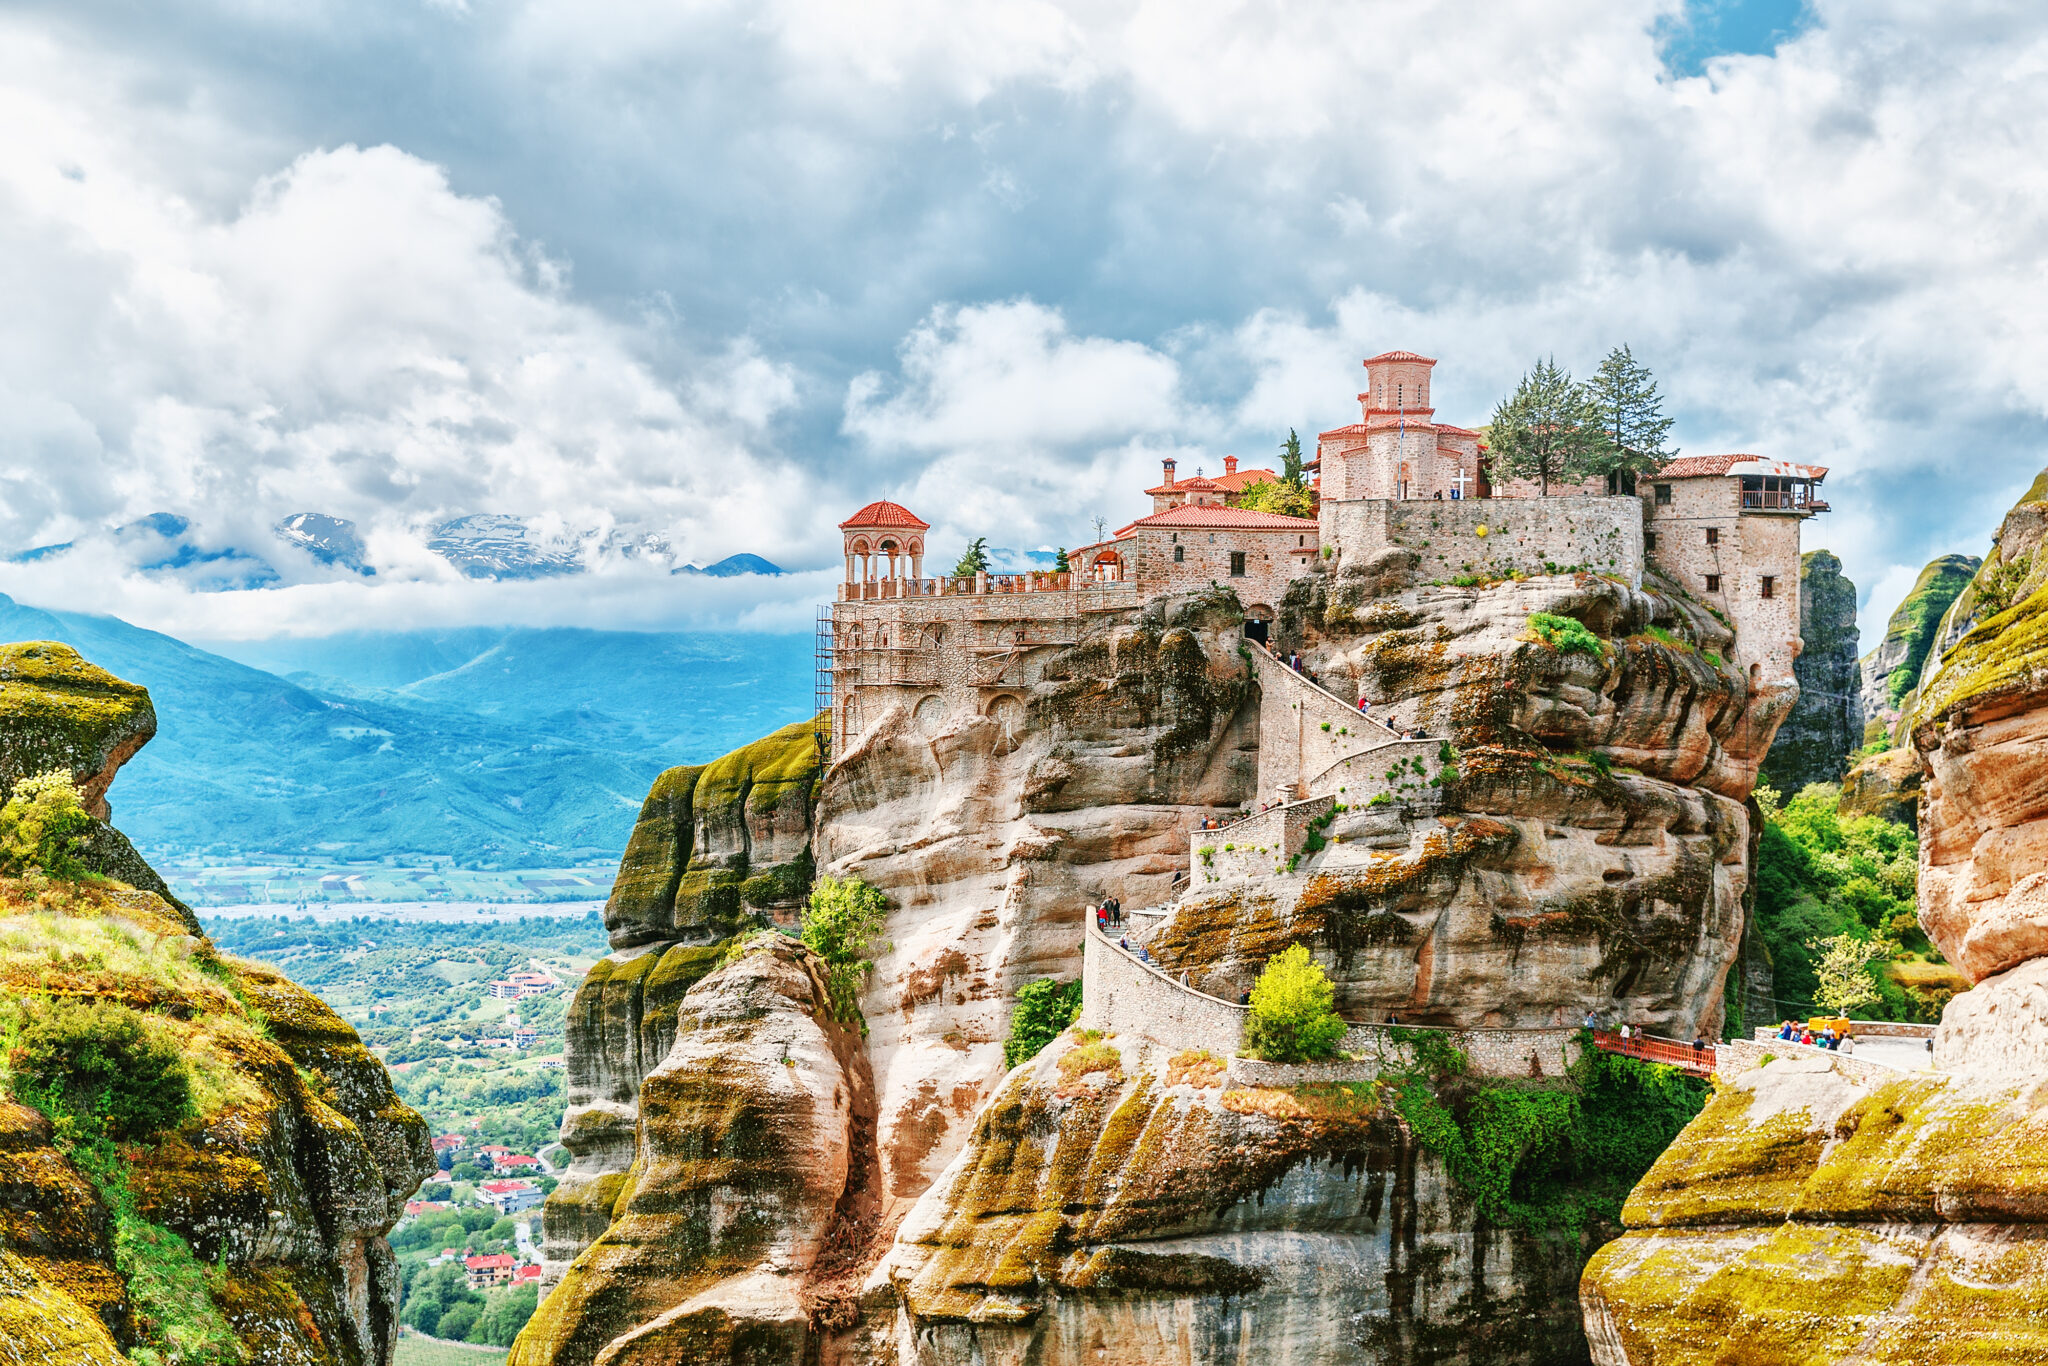 Meteora Monastery Views / Shutterstock